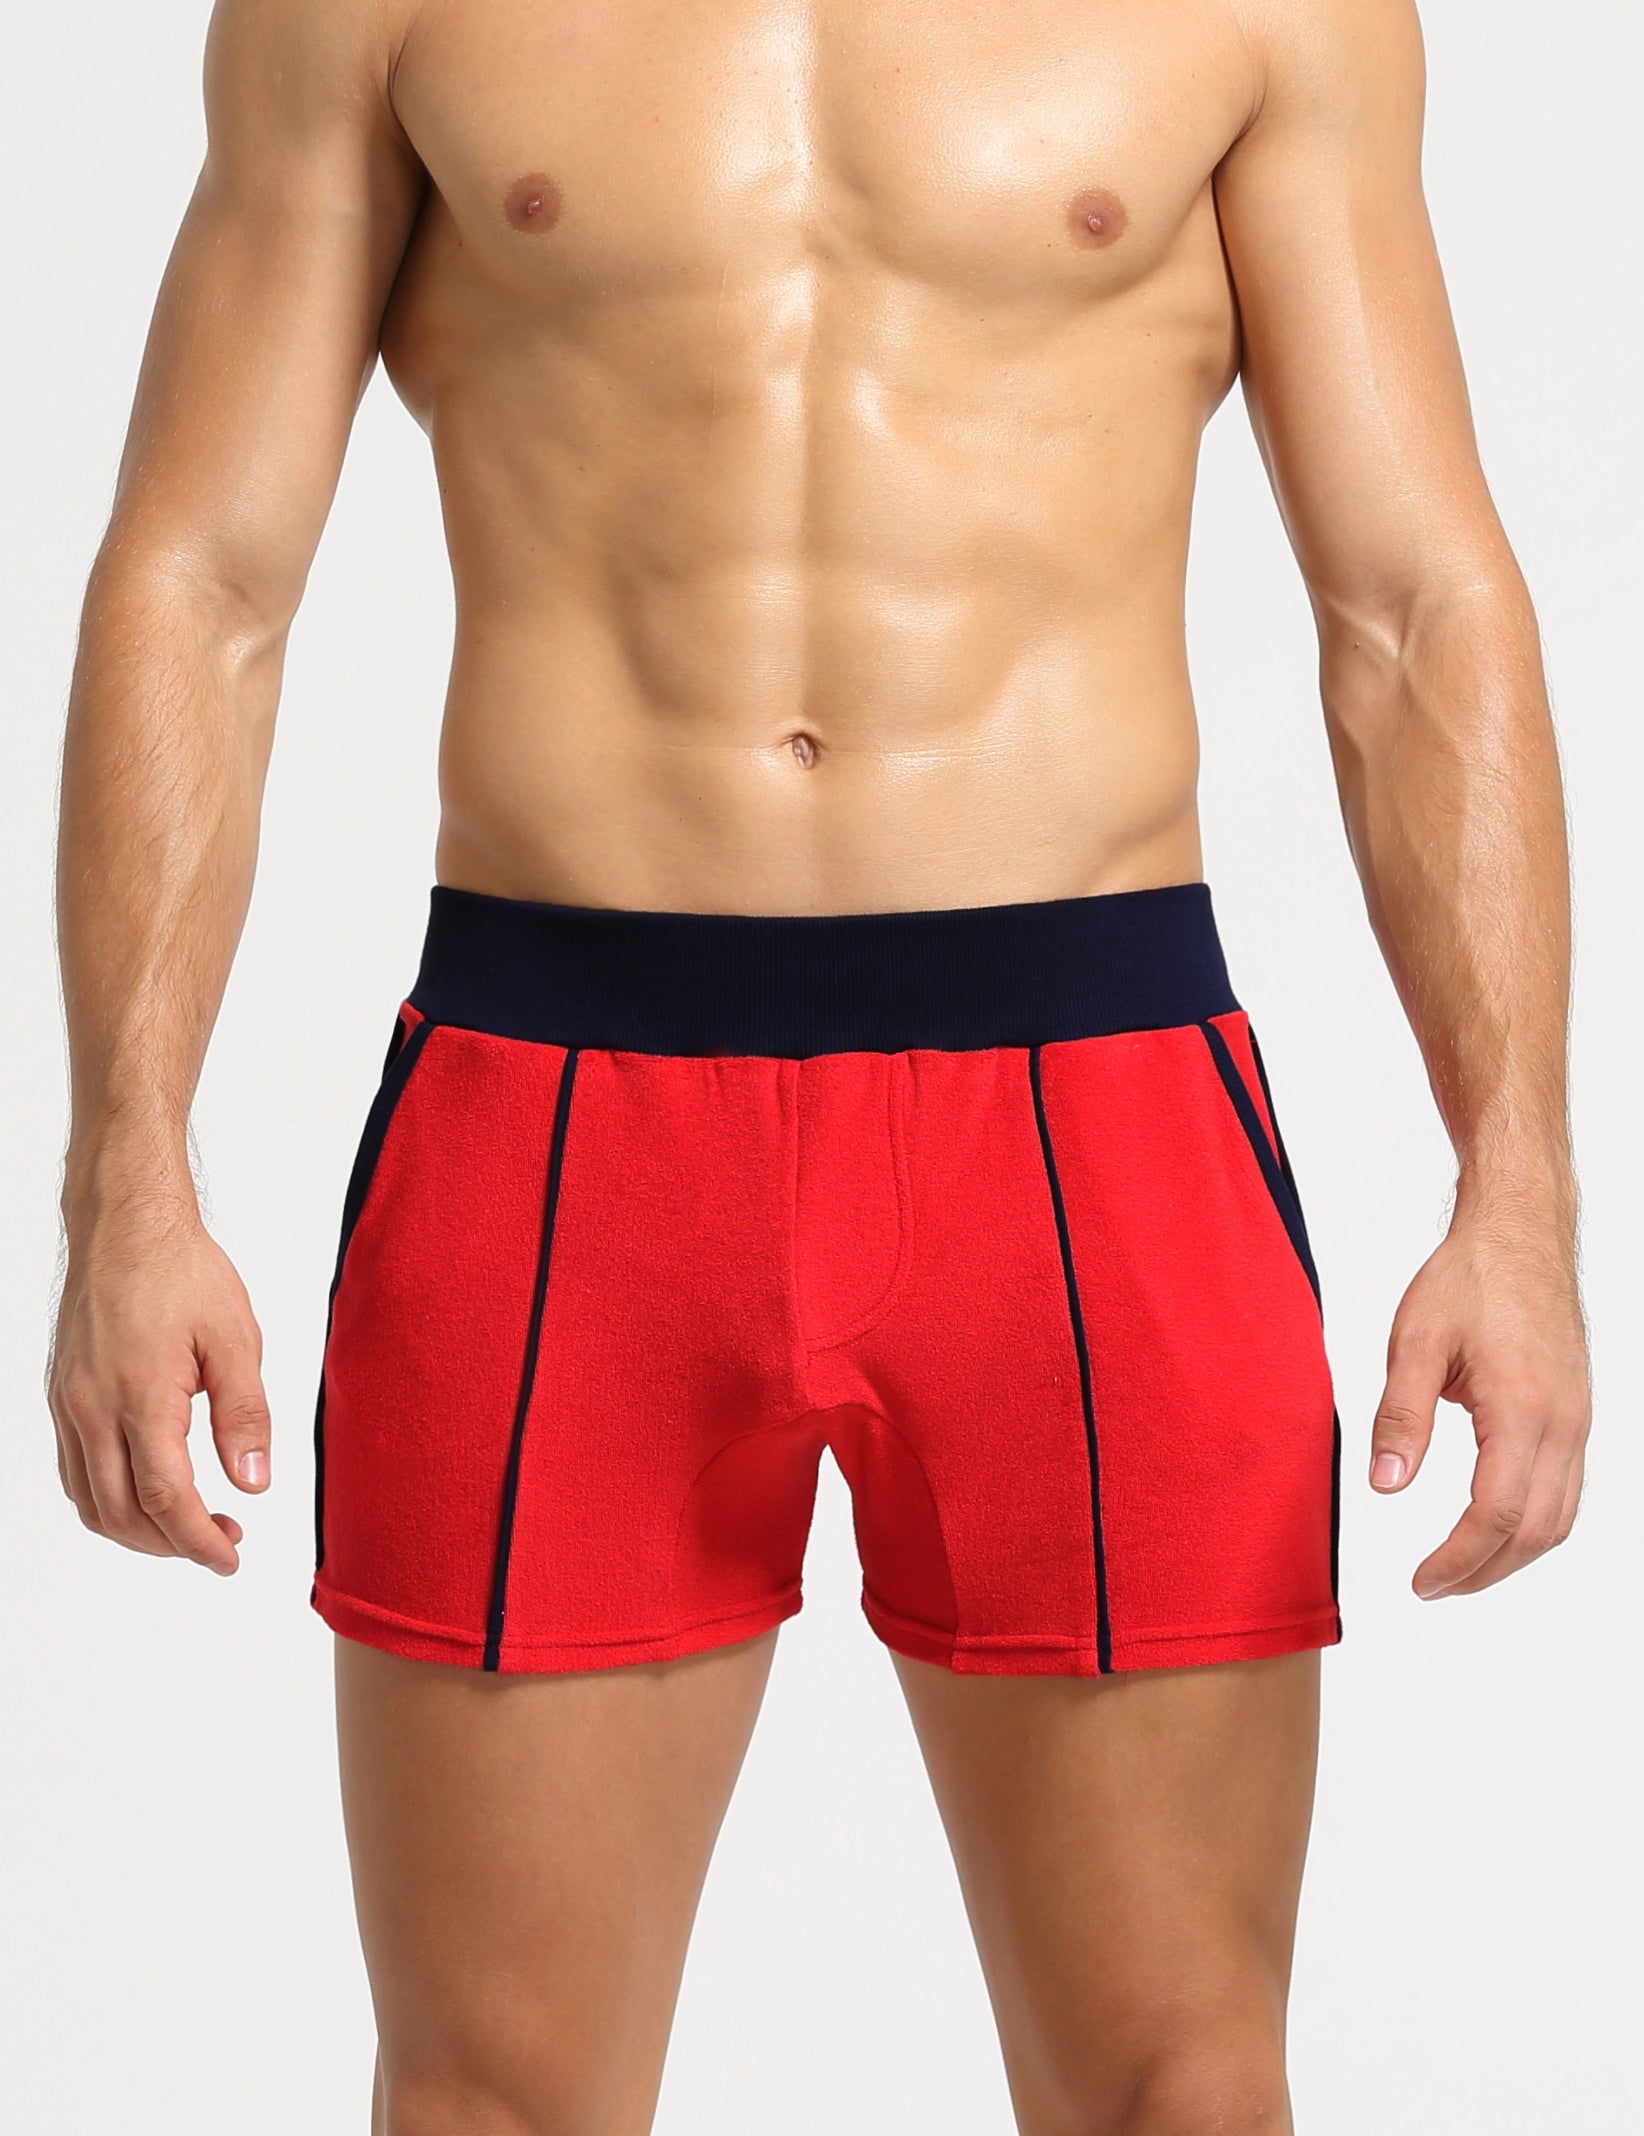 SEOBEAN Mens Sexy Low Rise Smooth Pile Furry Shorts Boxer